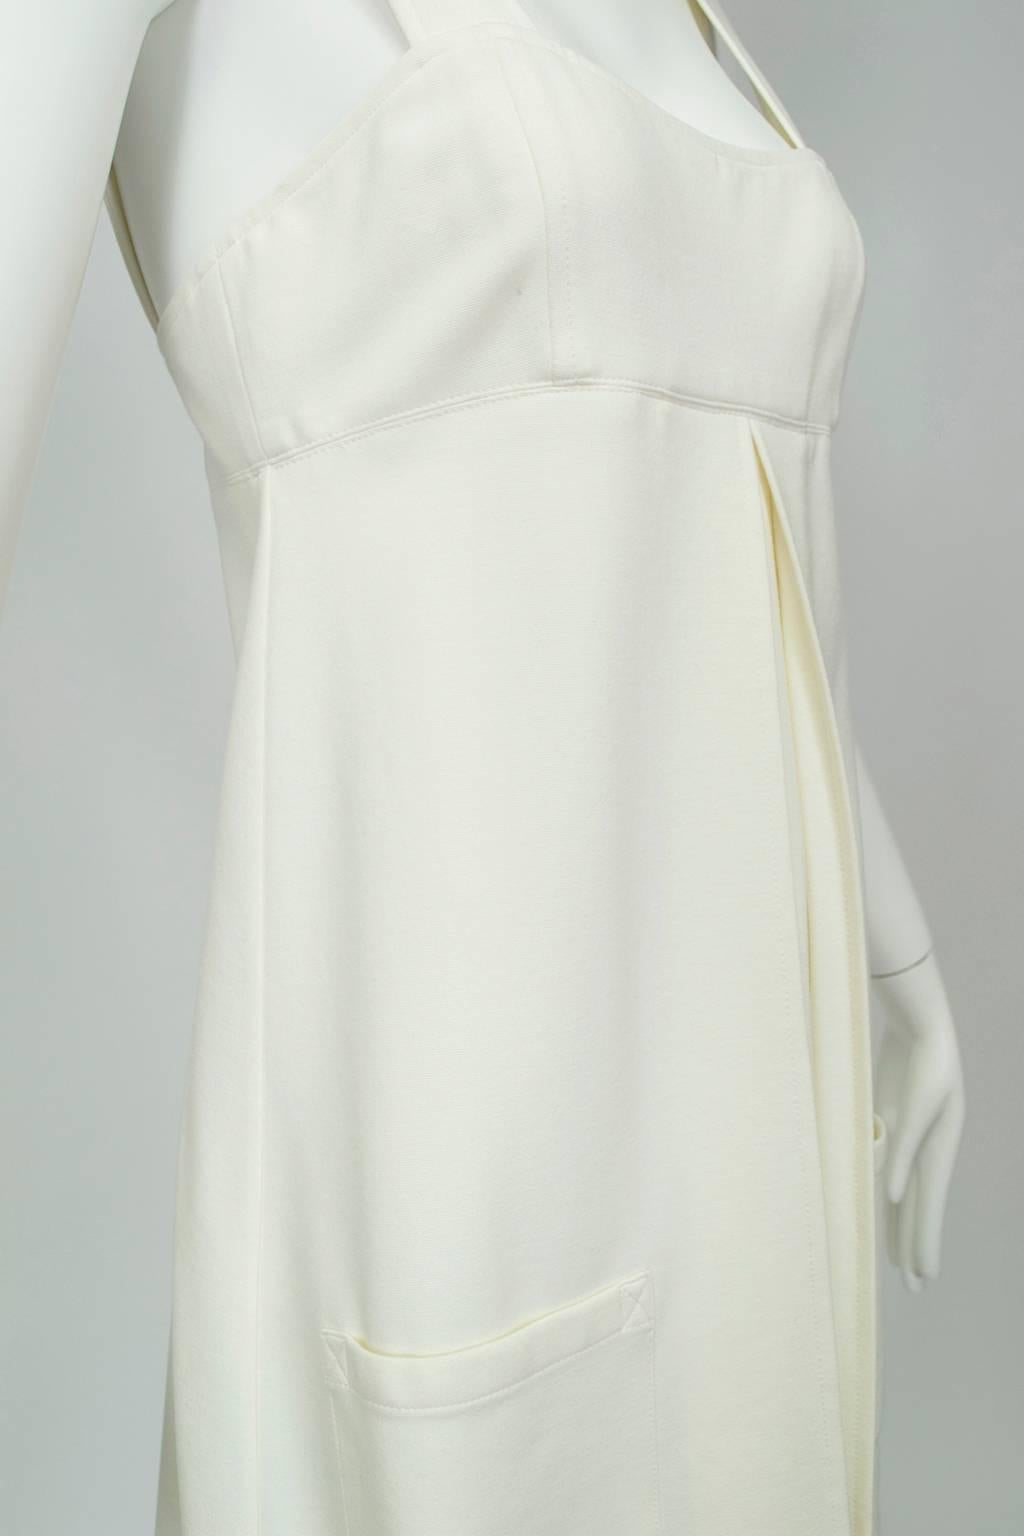 White von Furstenberg Empire Pinafore Tunic Micro Mini Dress - XS, 21st Century In Excellent Condition In Tucson, AZ